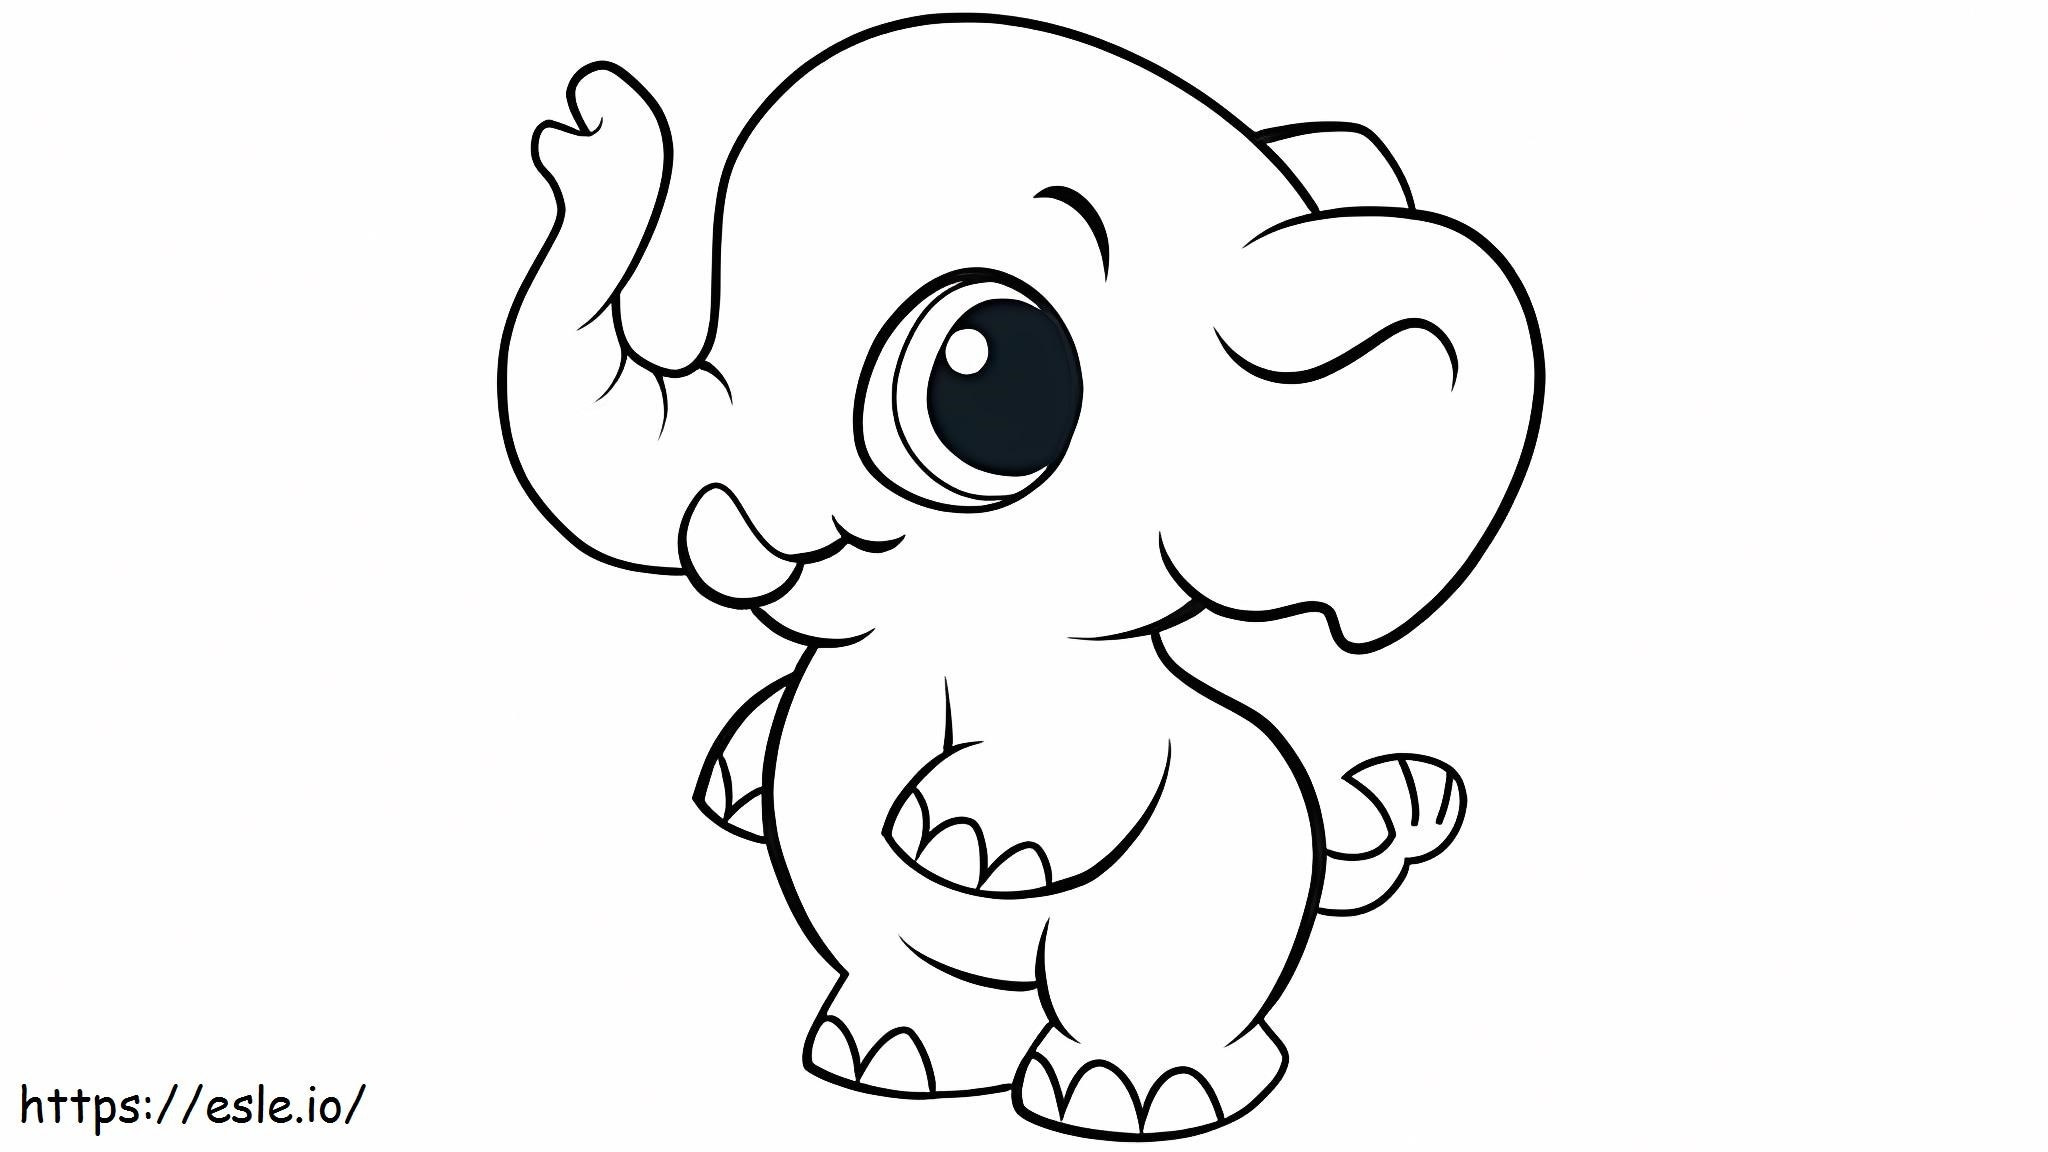 Chibi Elephant coloring page